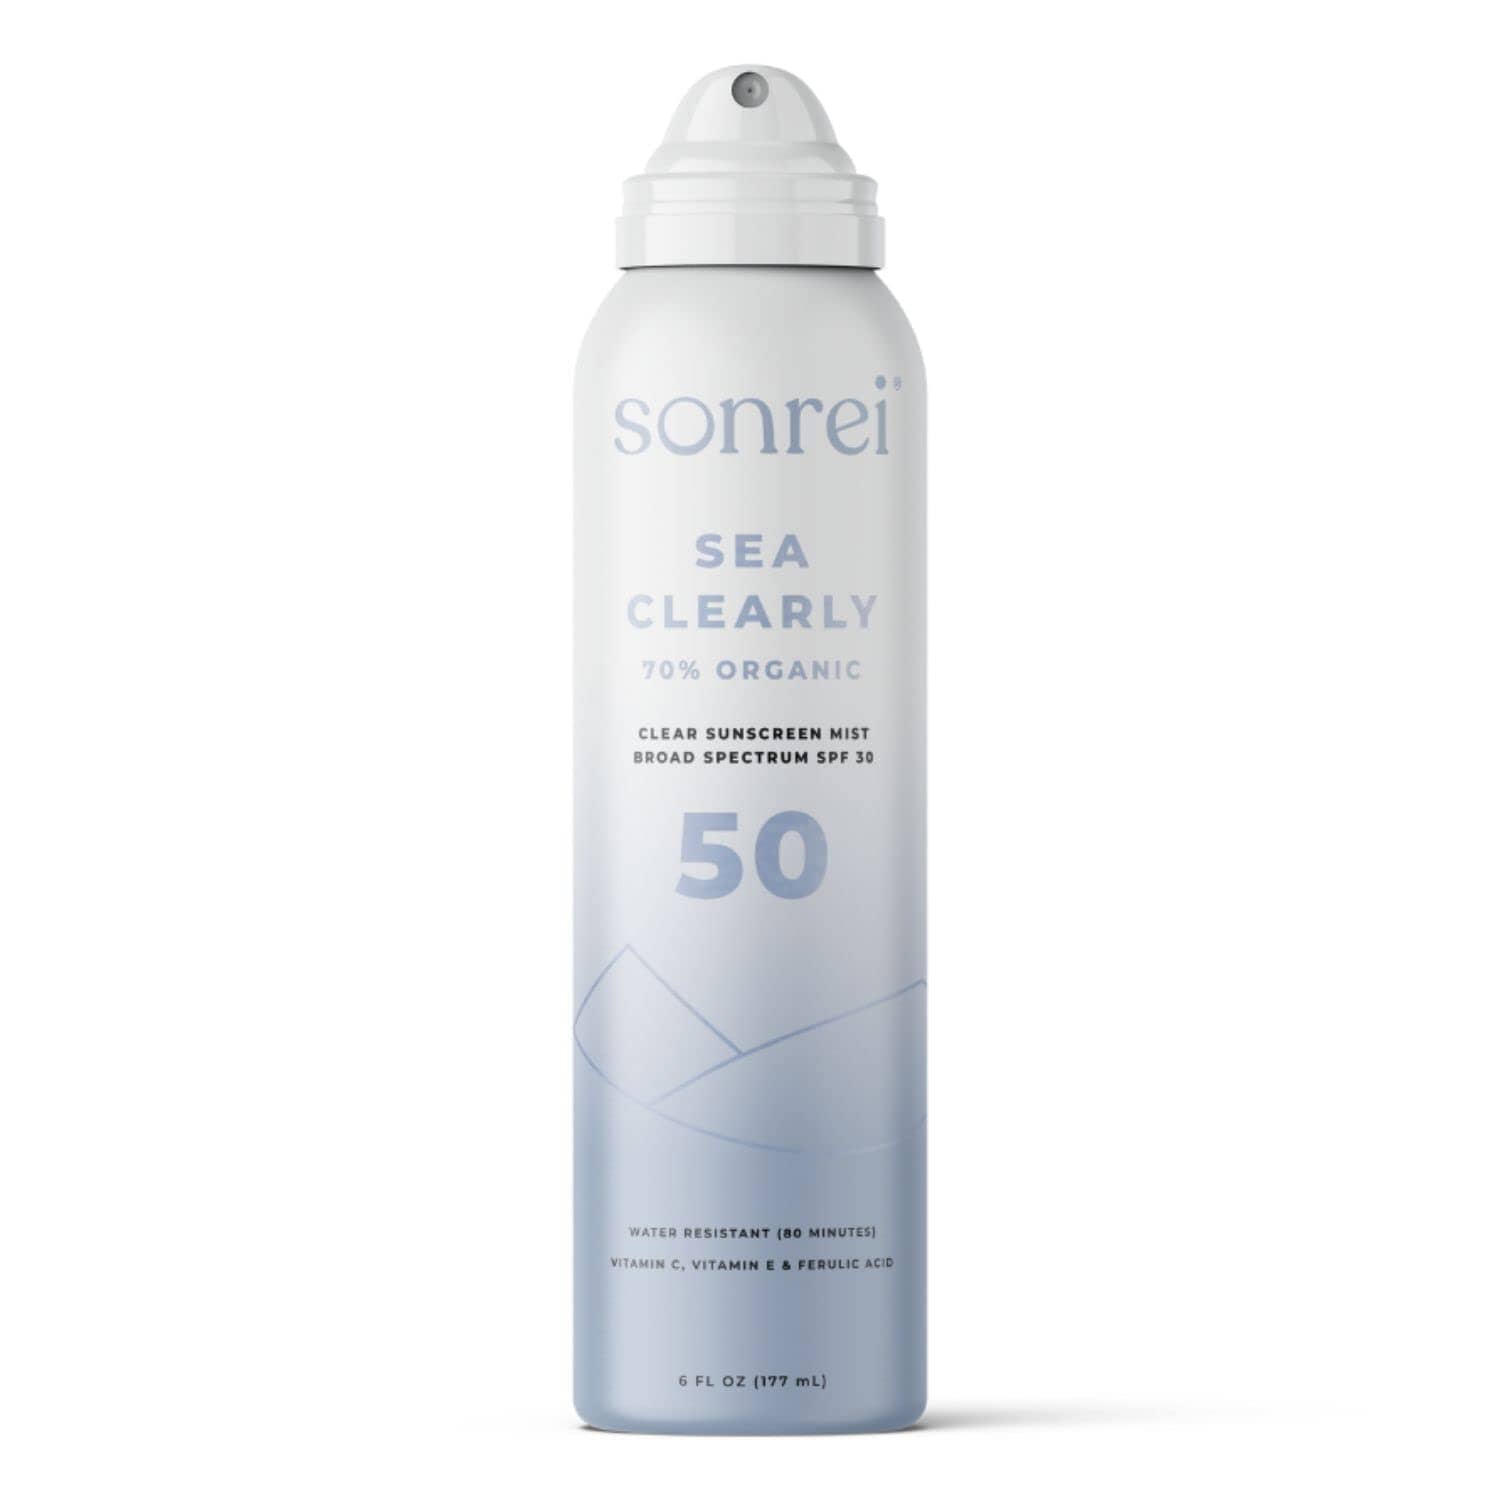 Sonrei Sea Clearly Organic SPF 50 Clear Sunscreen Mist